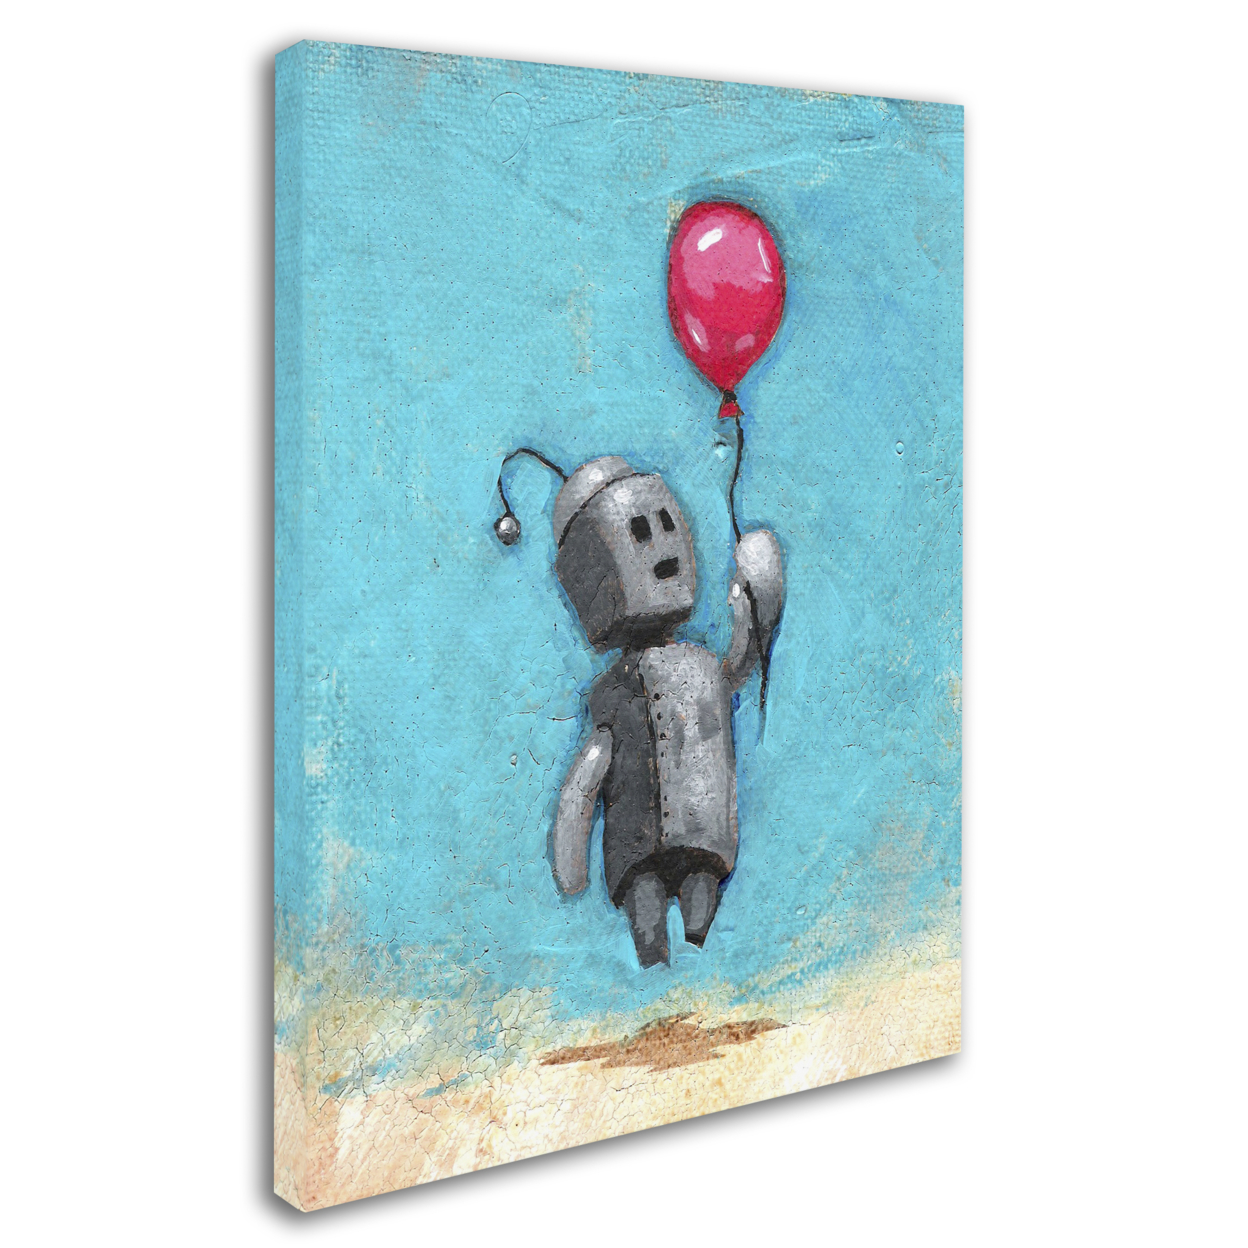 Craig Snodgrass 'Robot With Red Balloon' 14 X 19 Canvas Art